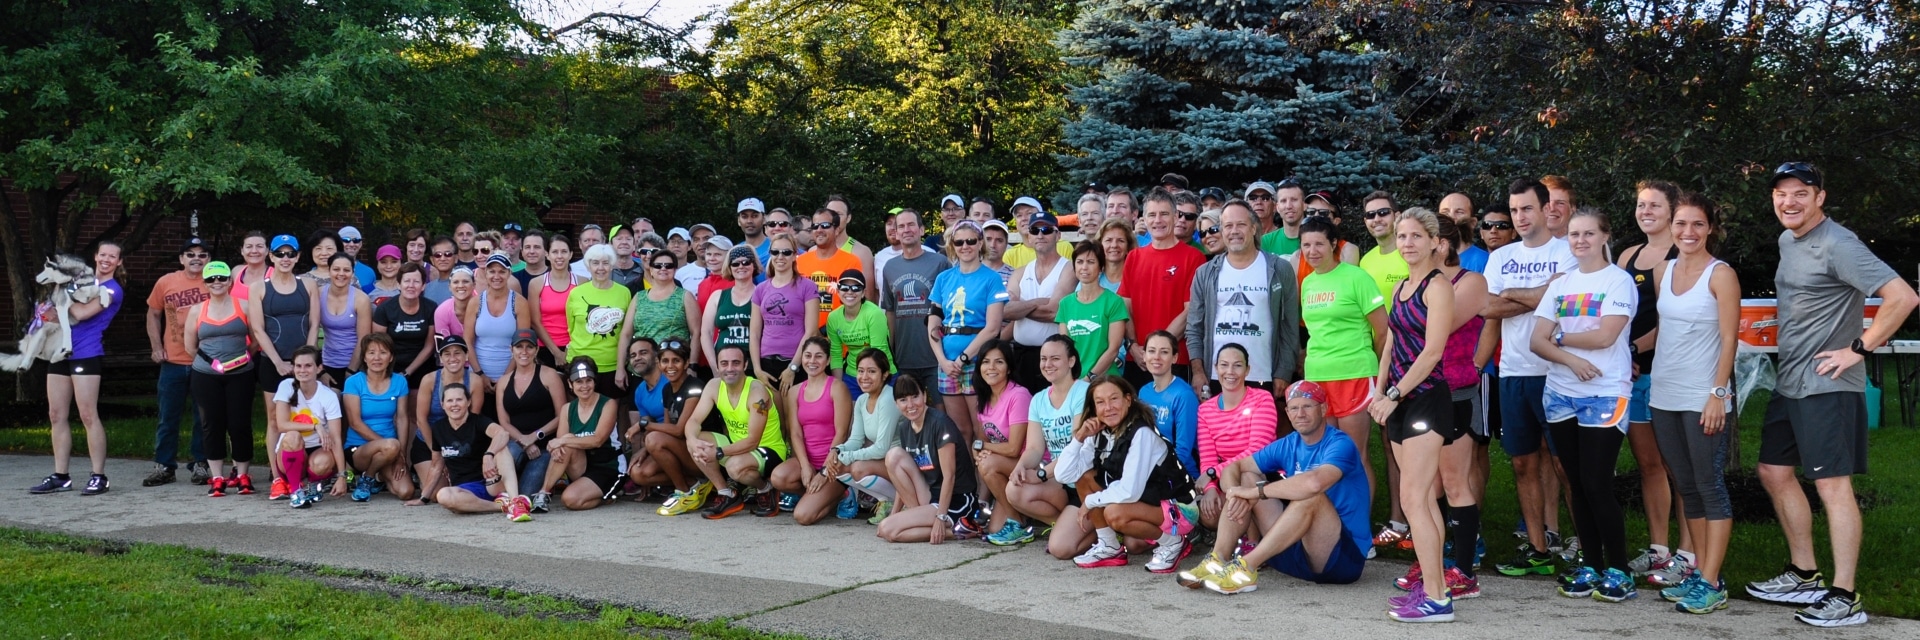 2015 Glen Ellyn Runners Club Group Photo